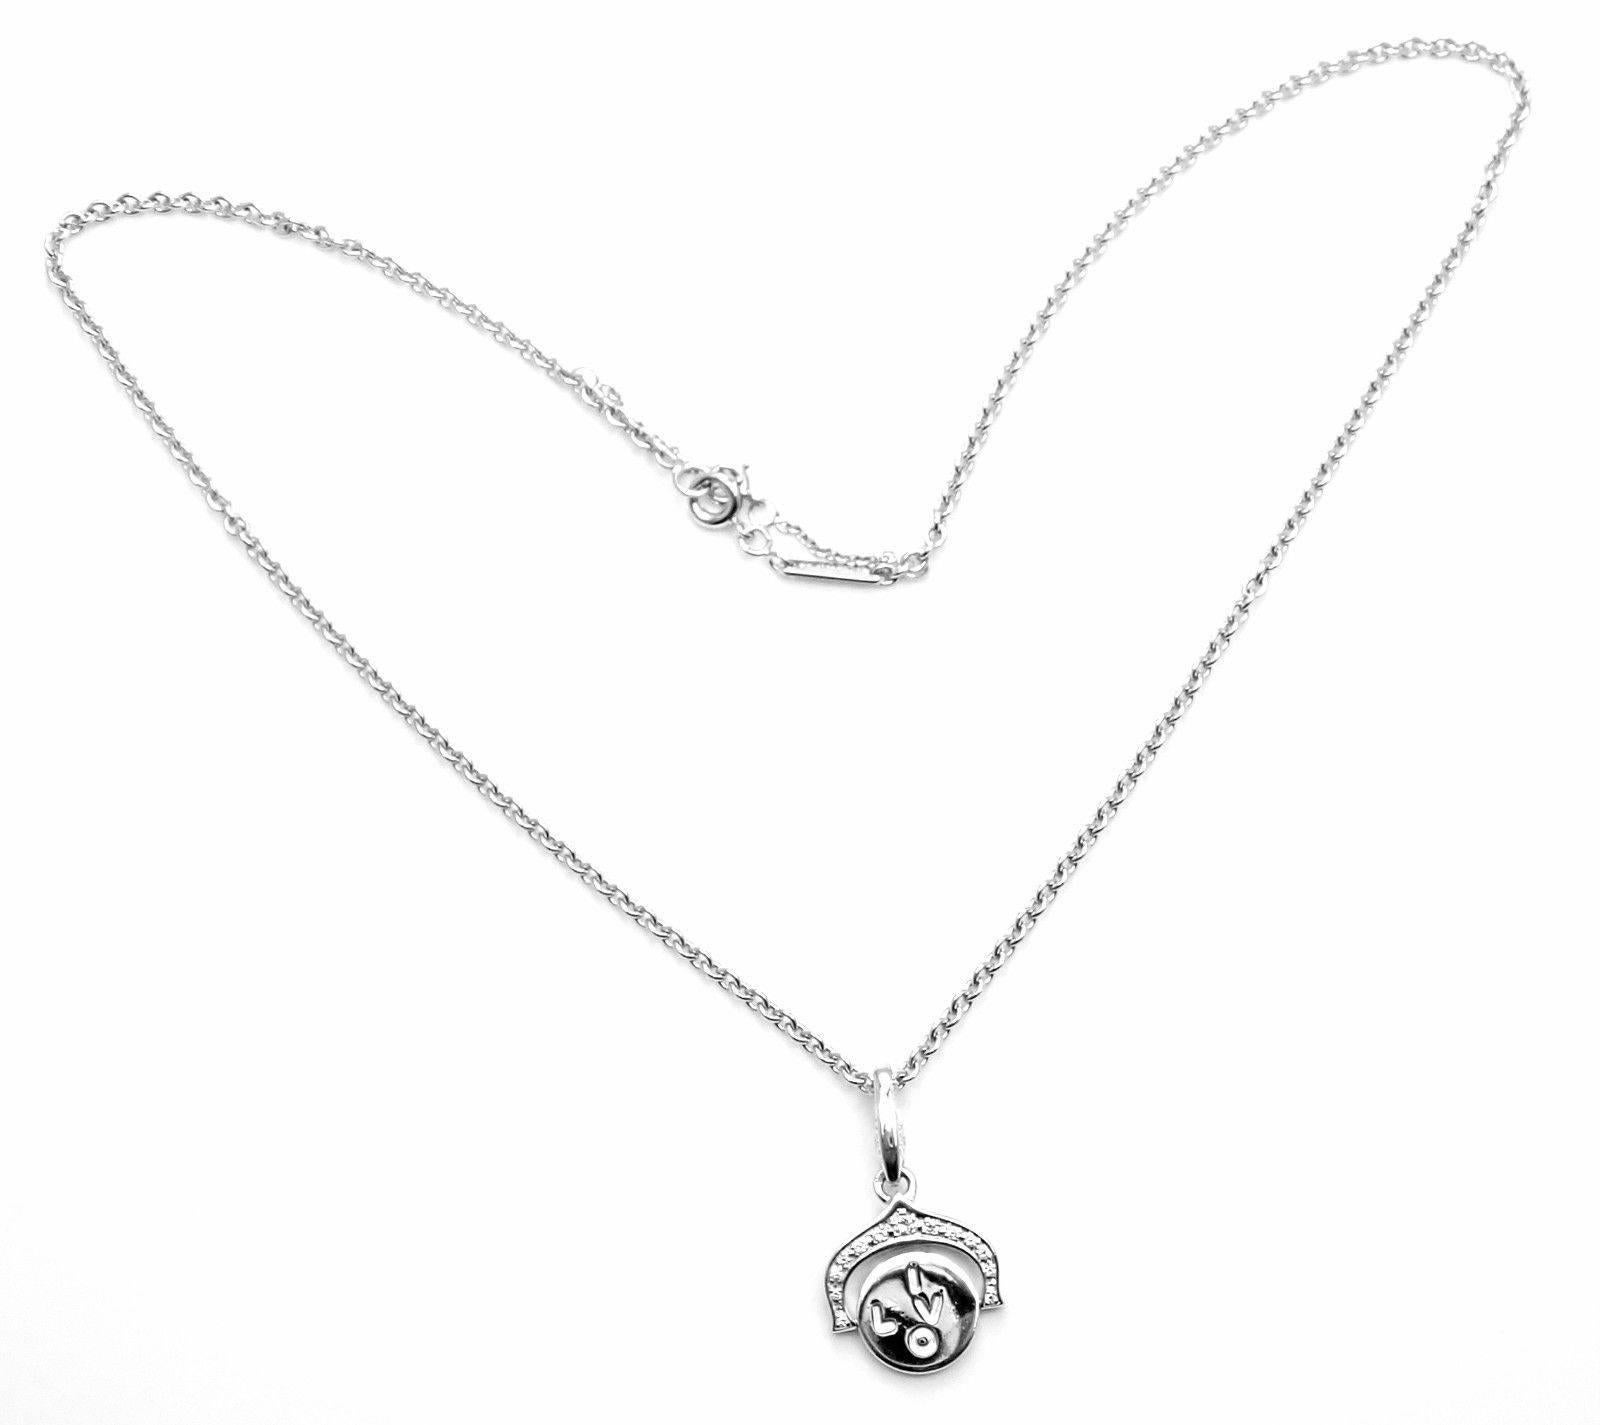 Women's or Men's Cartier Diamond I Love You White Gold Charm Pendant Necklace